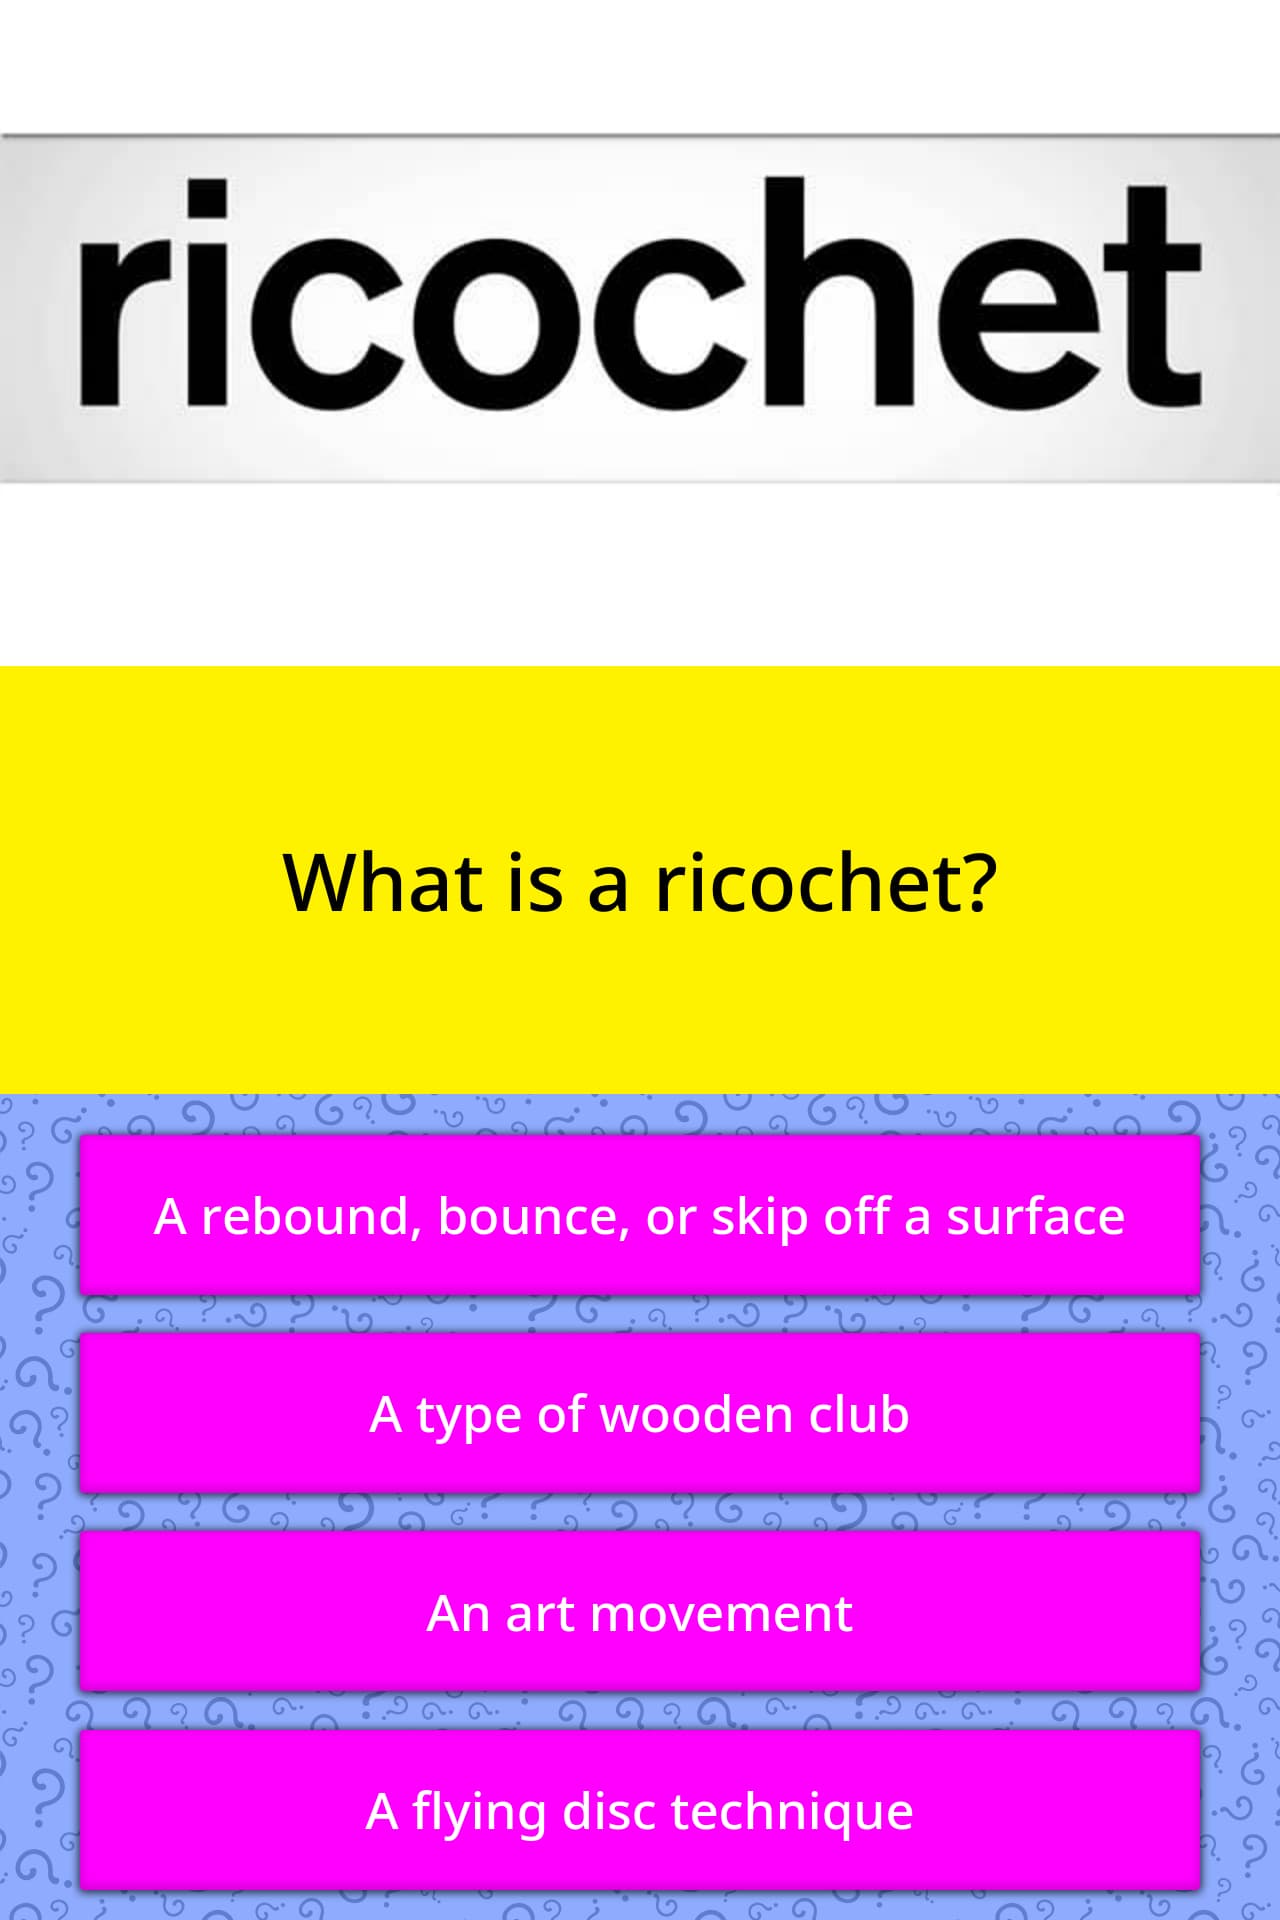 ricochet definition examples